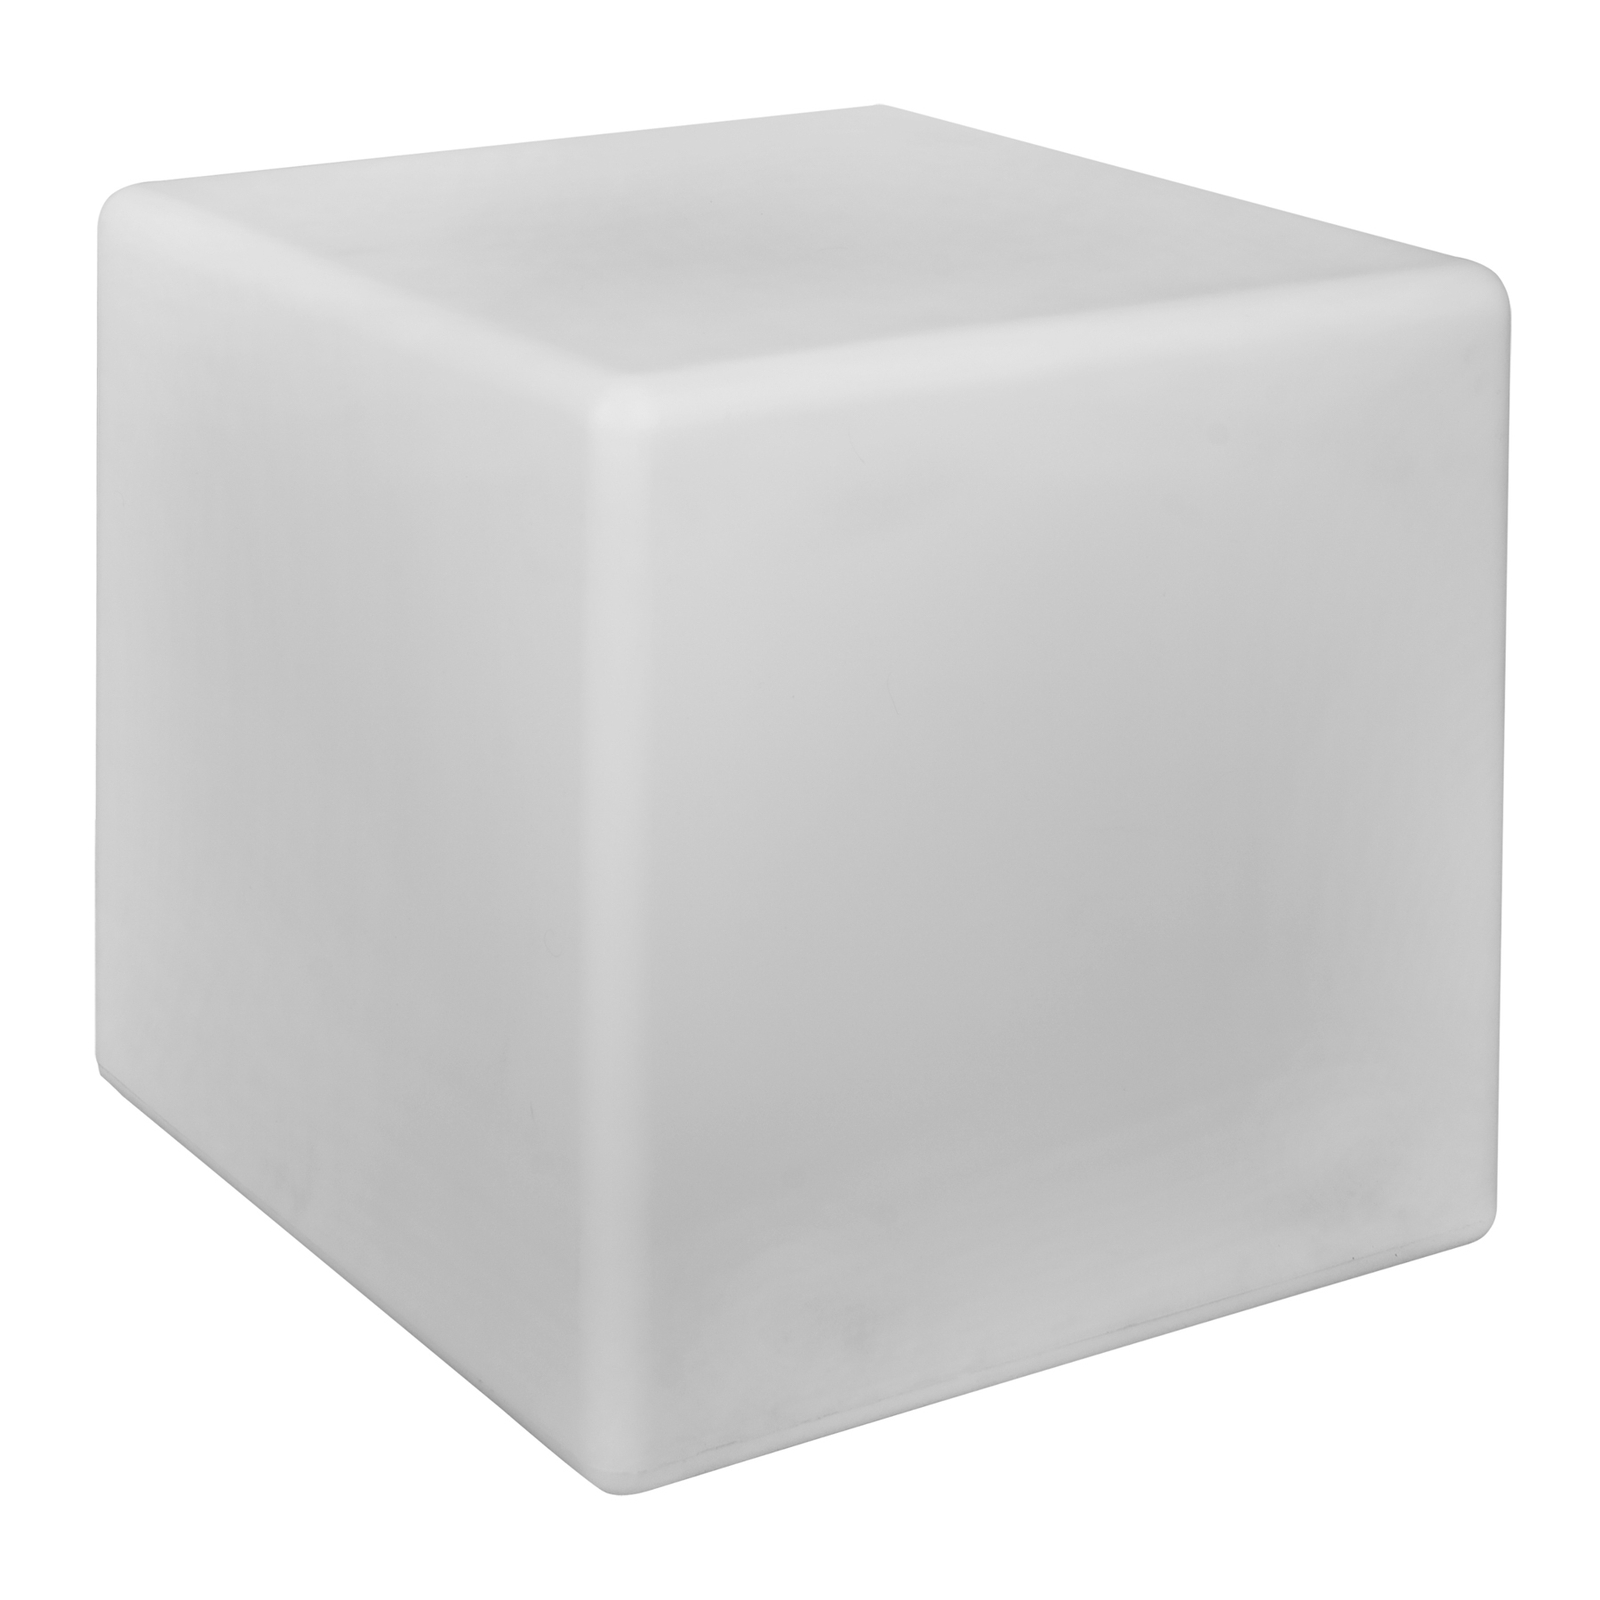 Ulkokoristevalaisin Cumulus Cube M, 38,5 x 38,5 cm